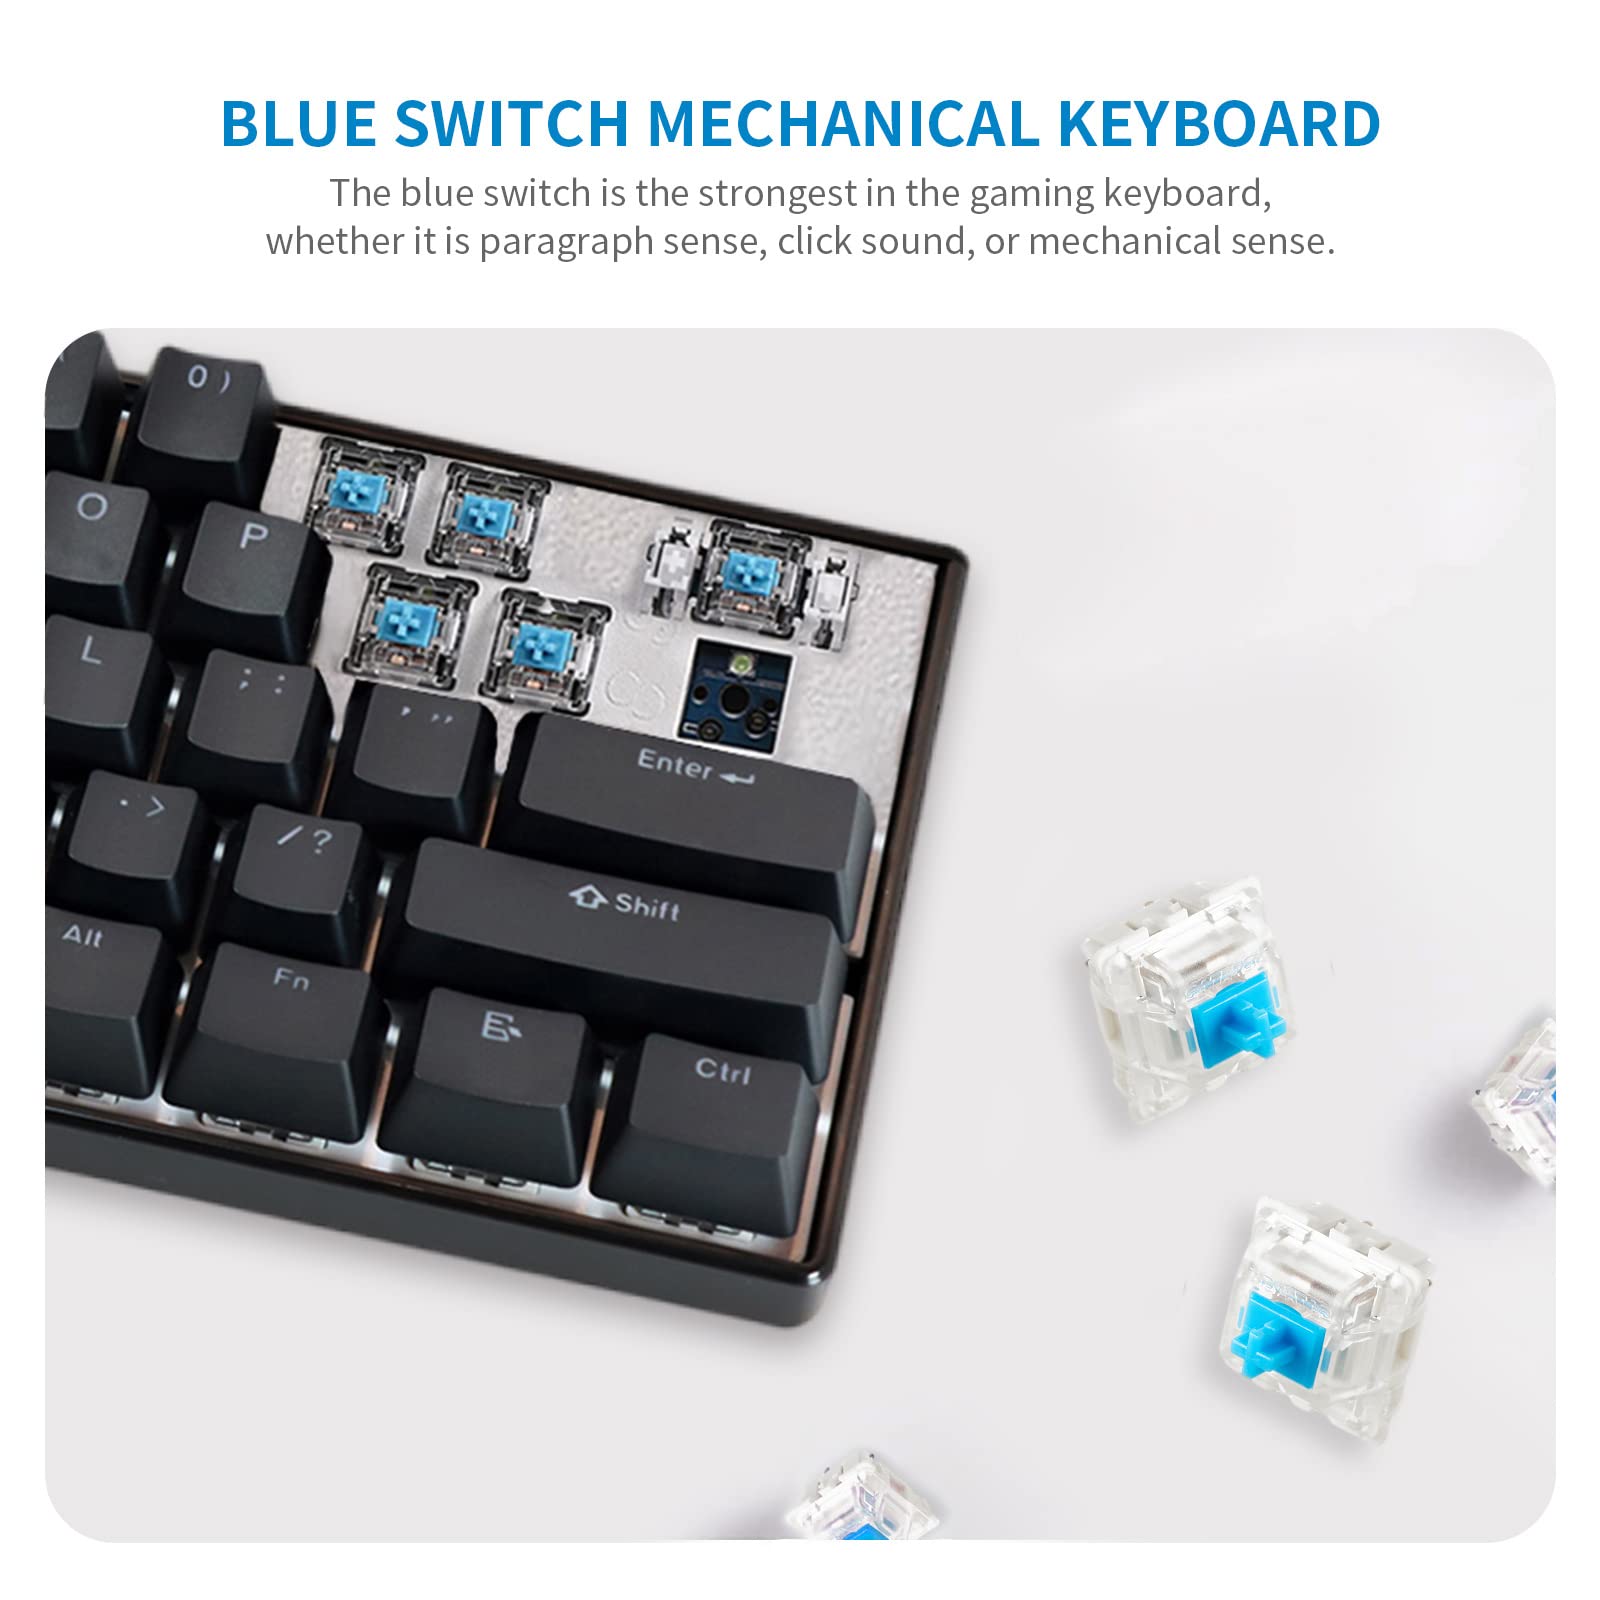 VIMUKUN 60% Mechanical Gaming Keyboard,RGB Backlit Wired Ultra-Compact Mini Keyboard, Waterproof 61 Keys Keyboard with Blue Switch for Windows Laptop/PC/Mac